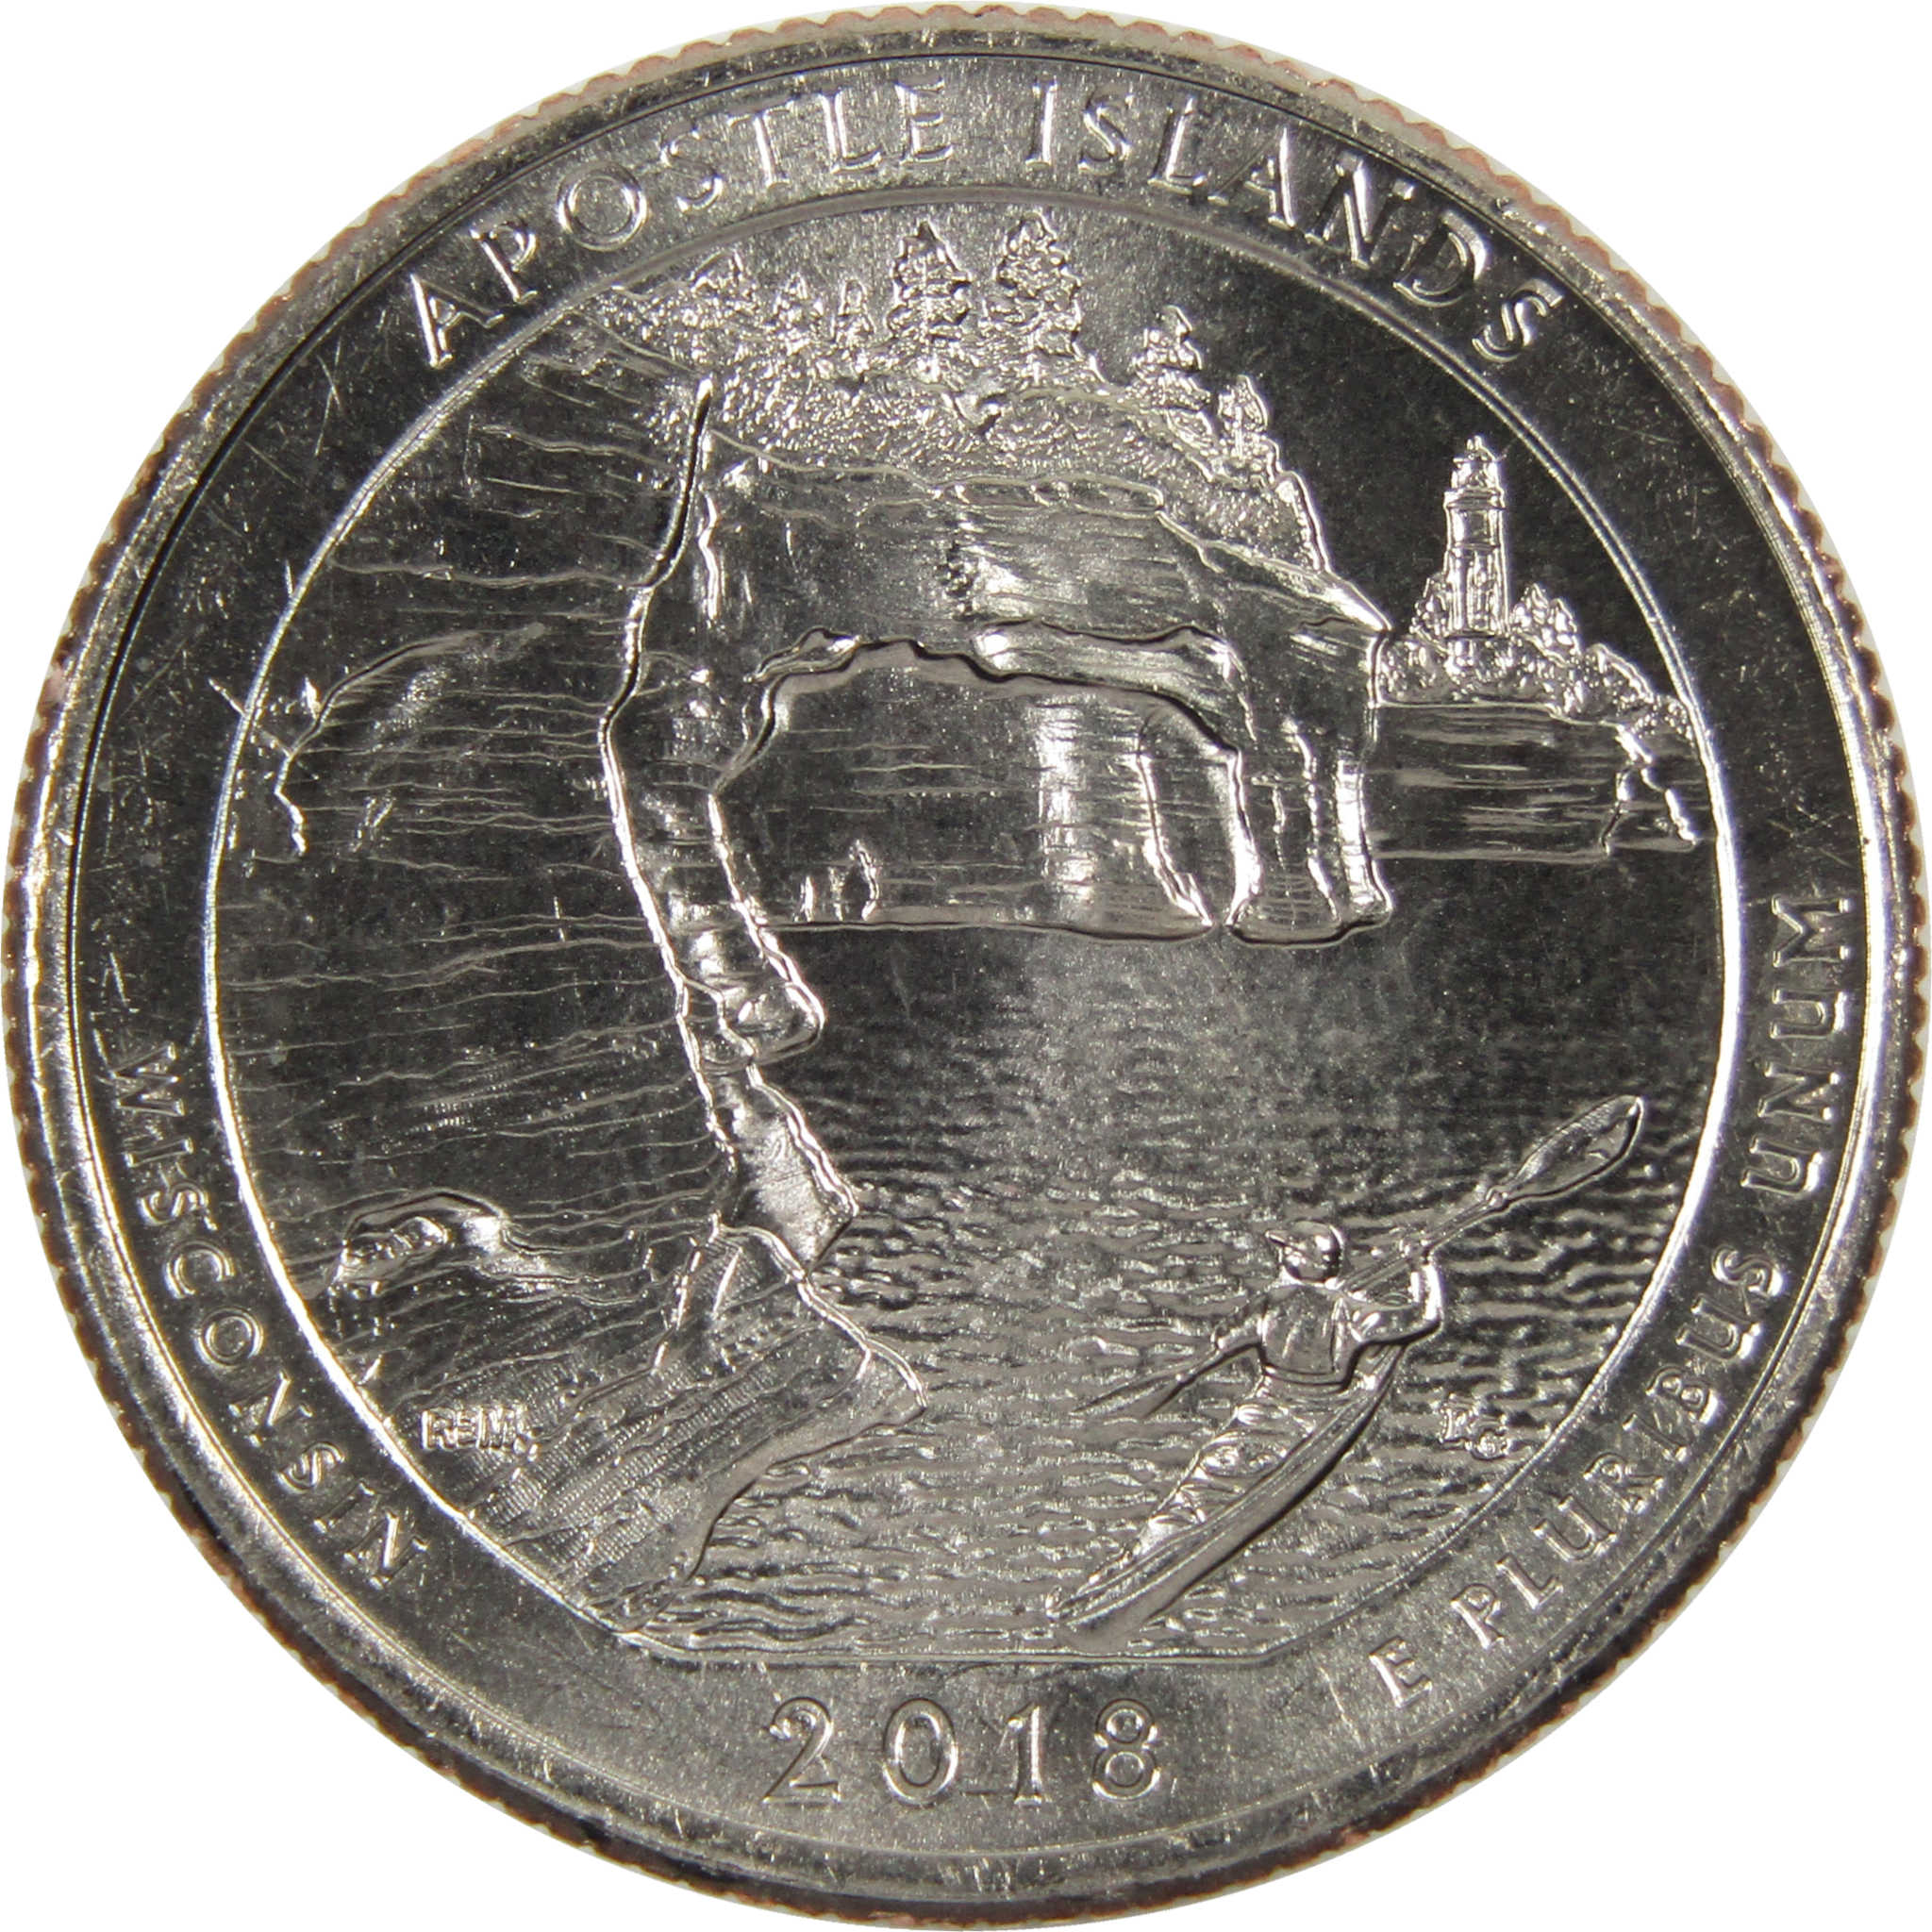 2018 P Apostle Islands National Park Quarter BU Uncirculated Clad Coin